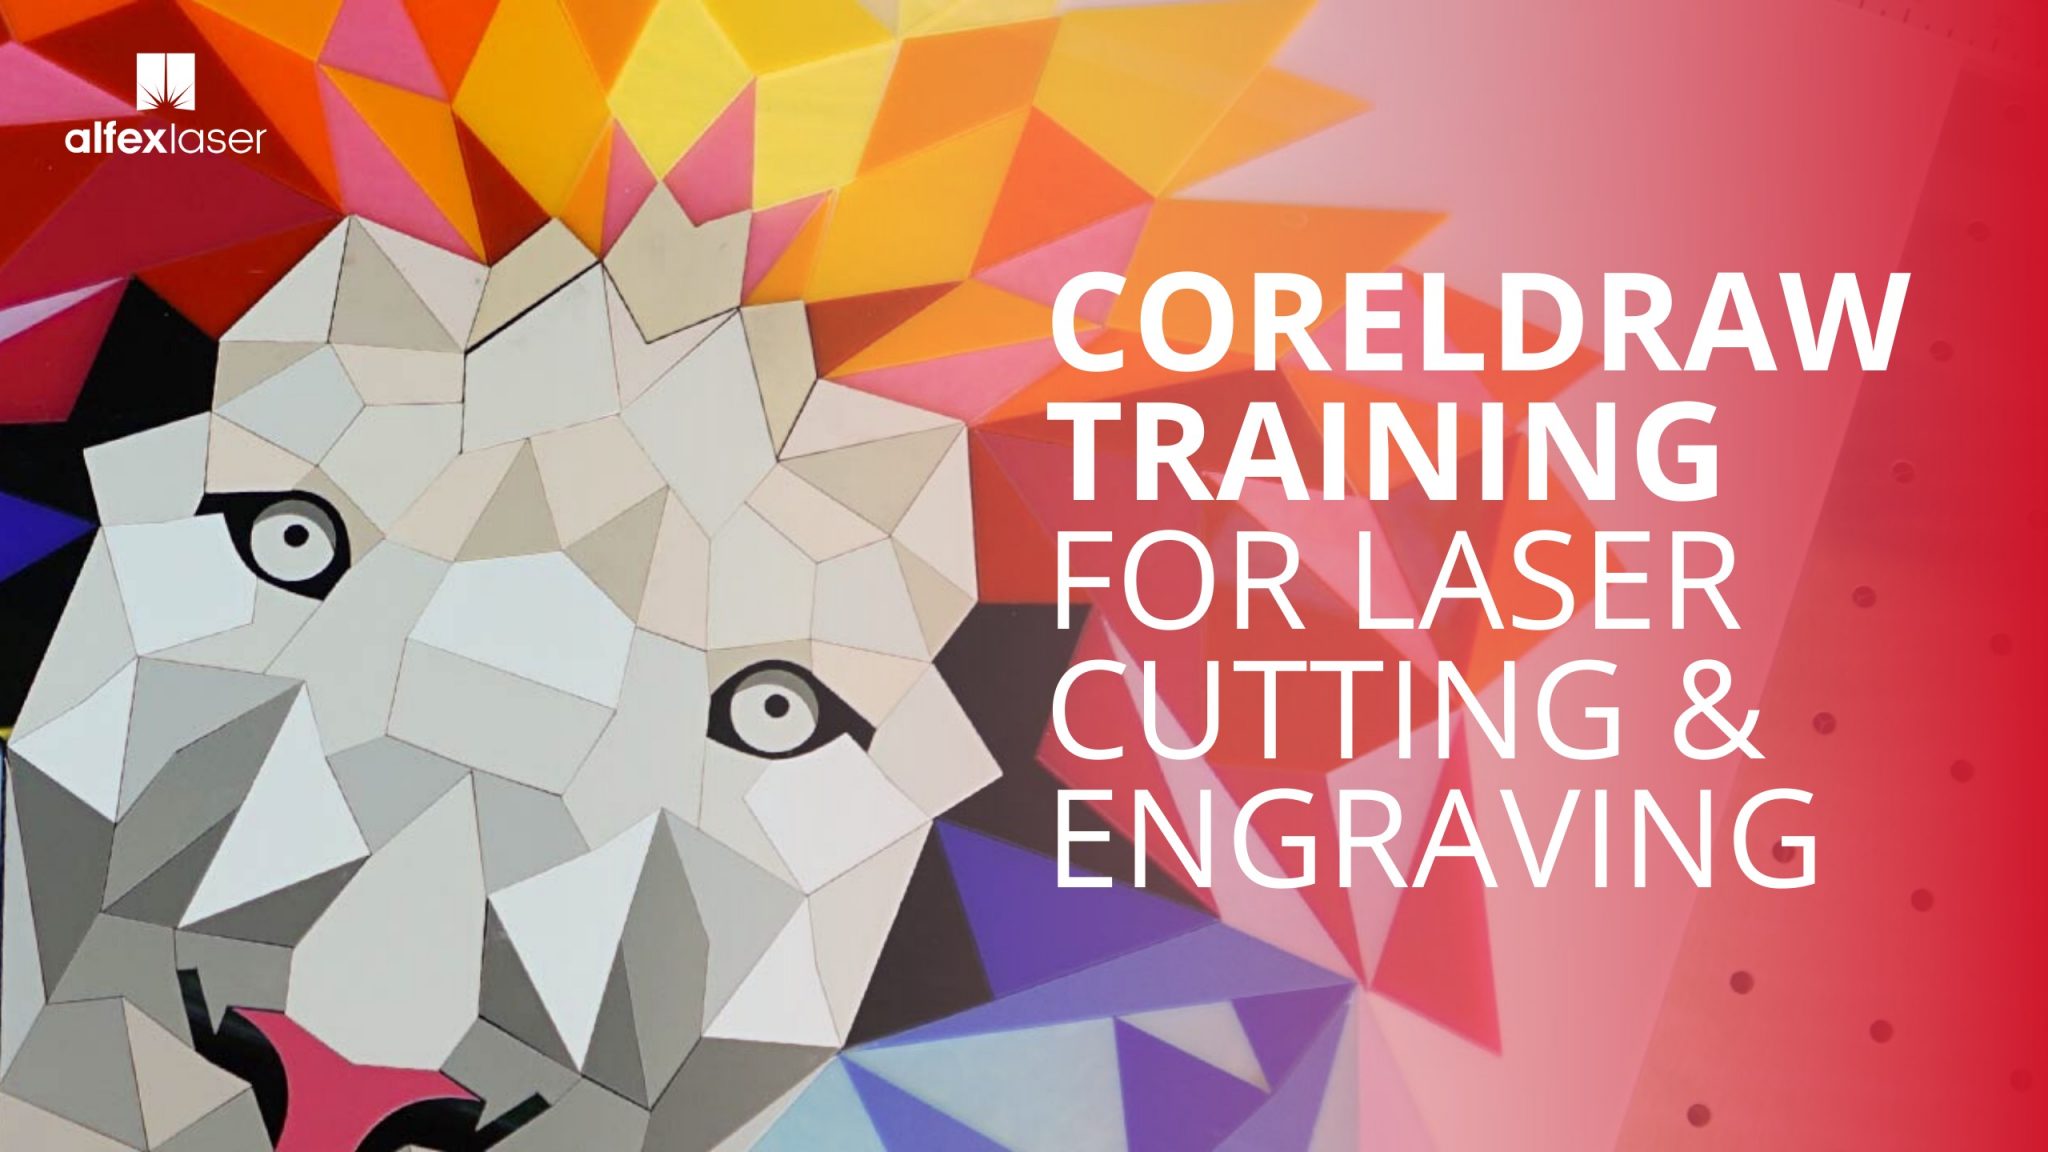 CorelDRAW Training Classes